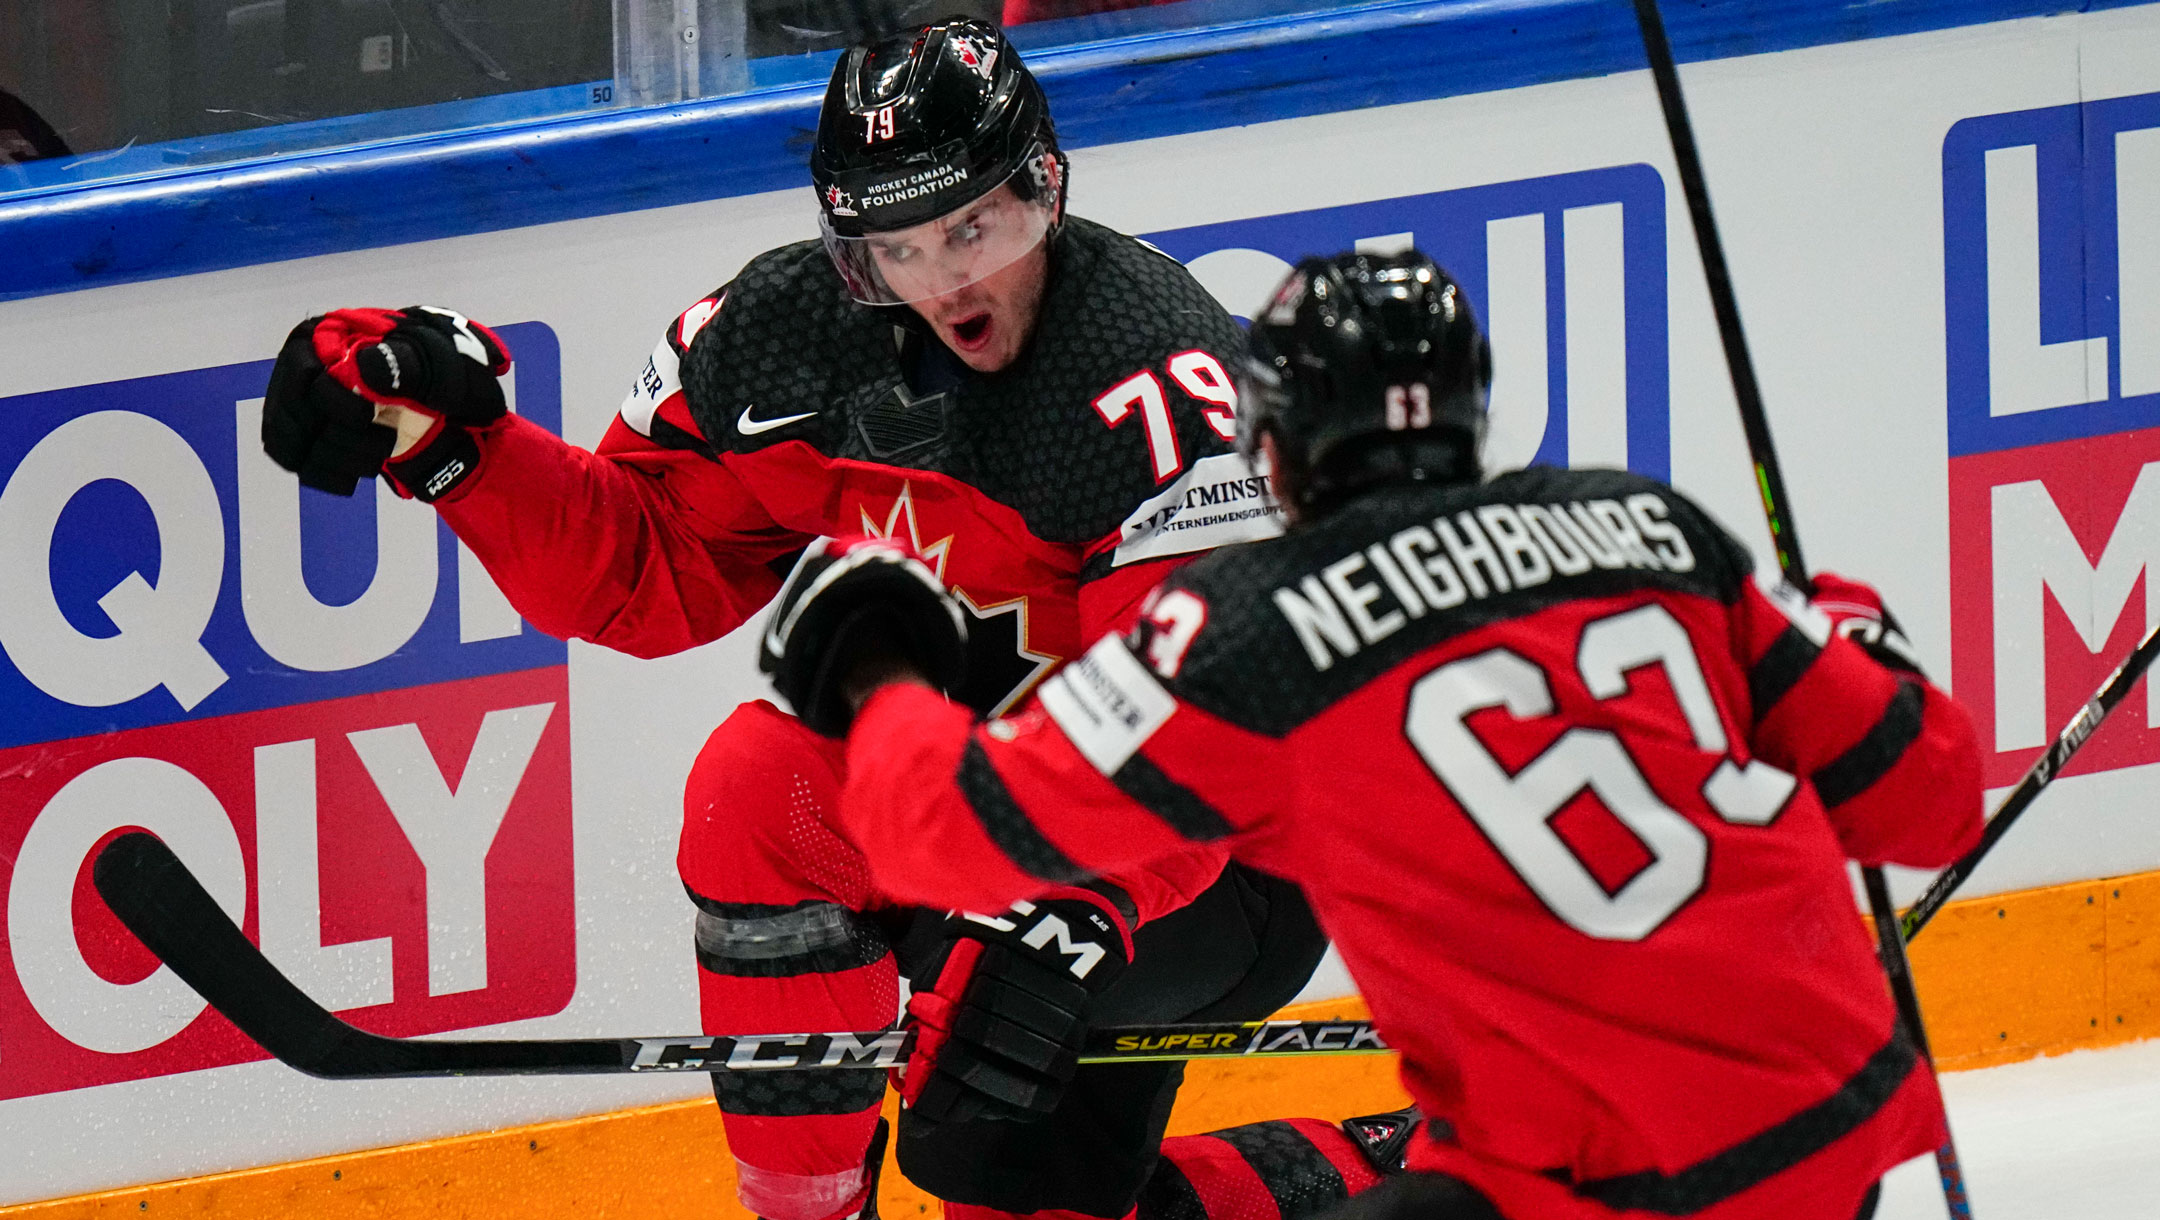 Canada wins gold at 2023 IIHF World Championship